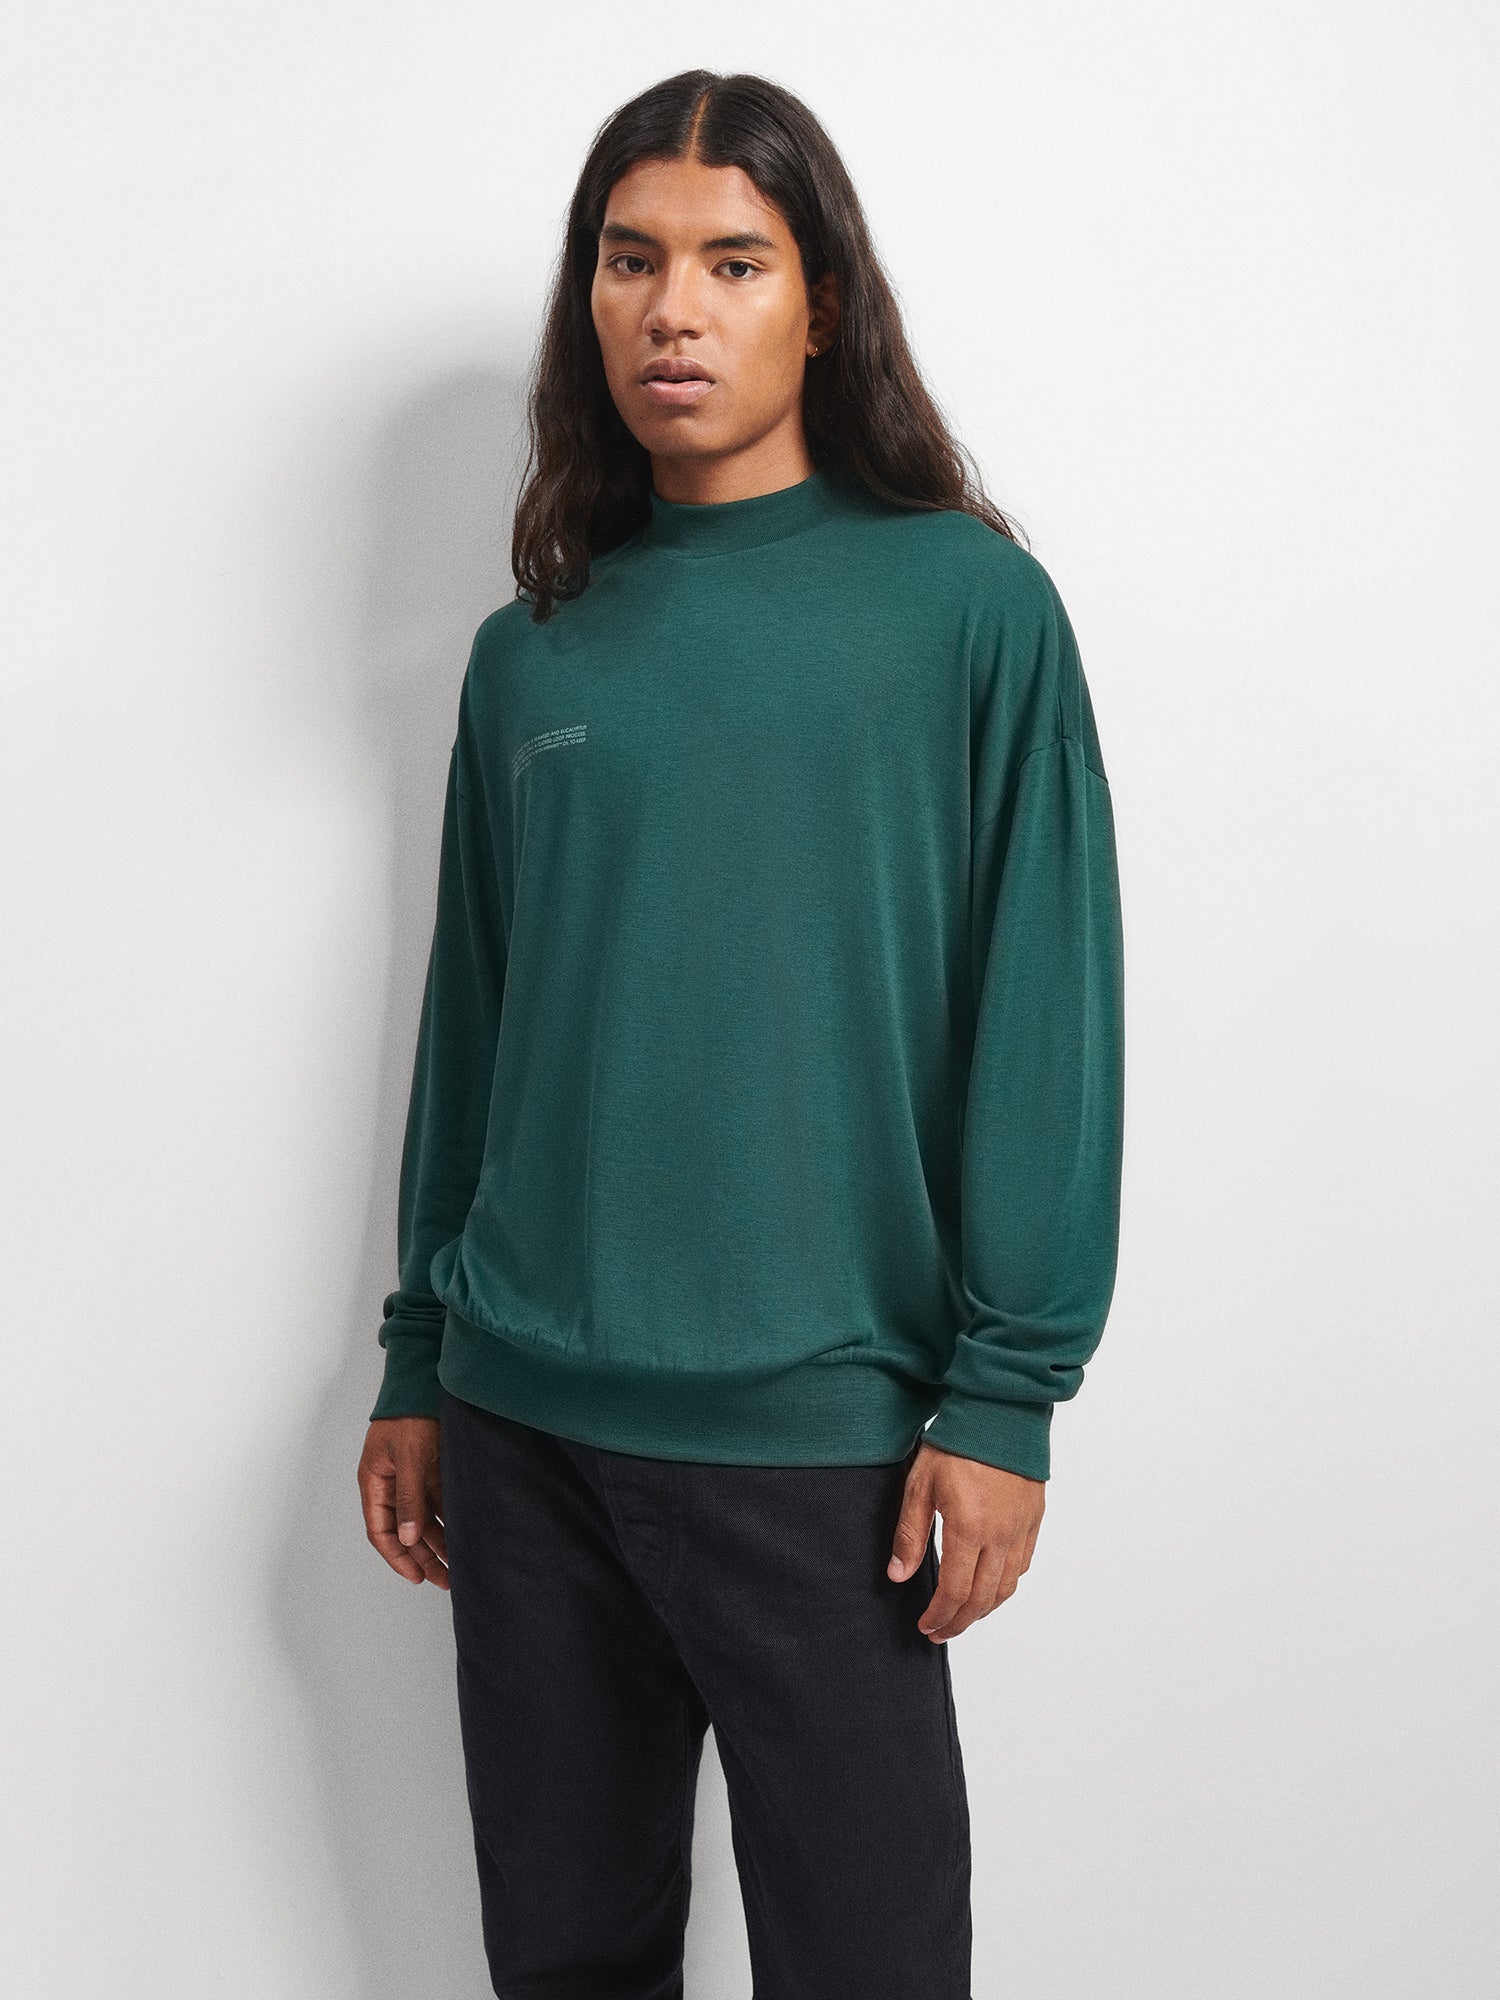 Mens_C-Fiber_Pure_High_Neck_T-Shirt_Foliage_Green-1